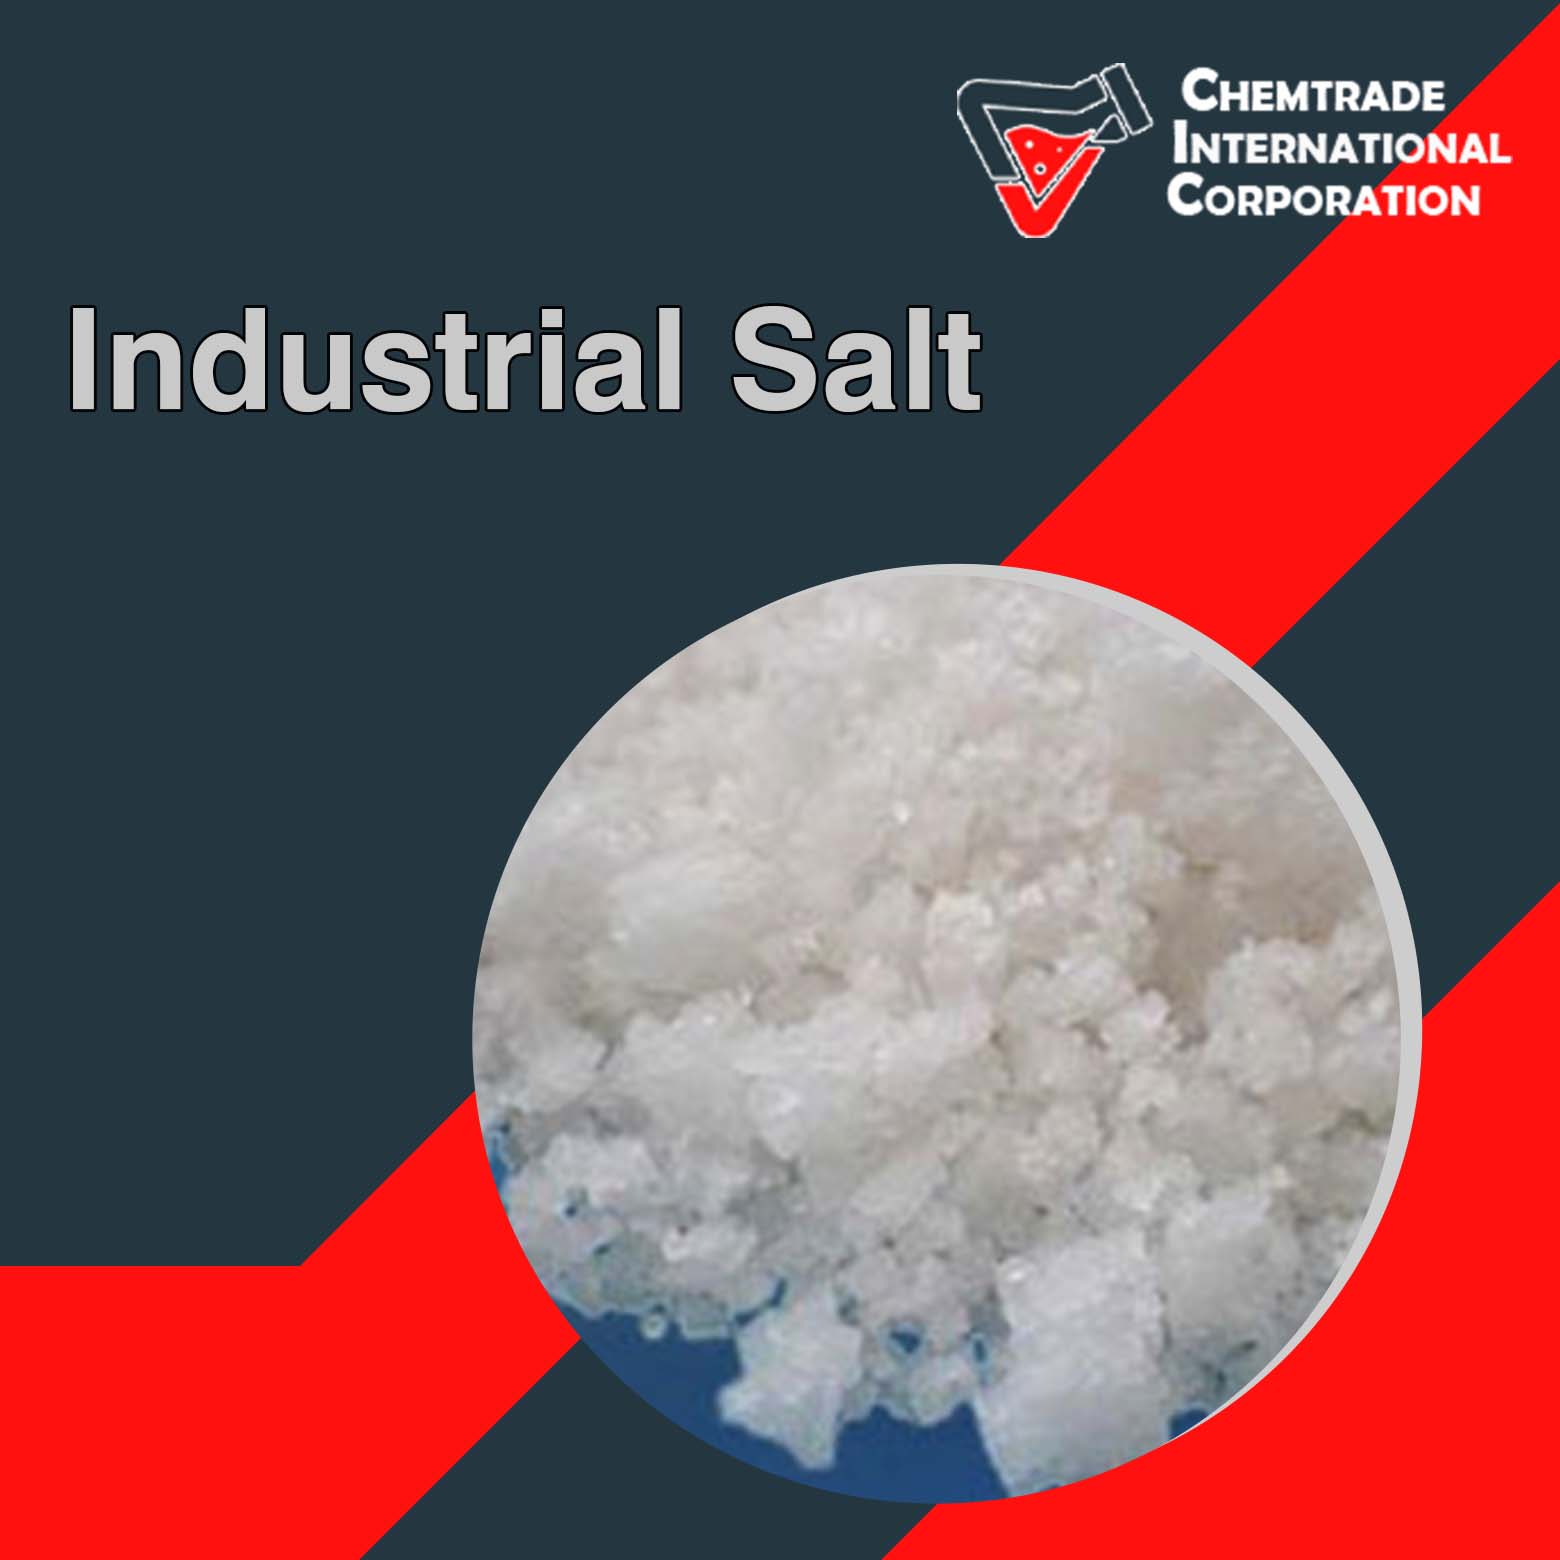 Industrial Salt In Charleroi